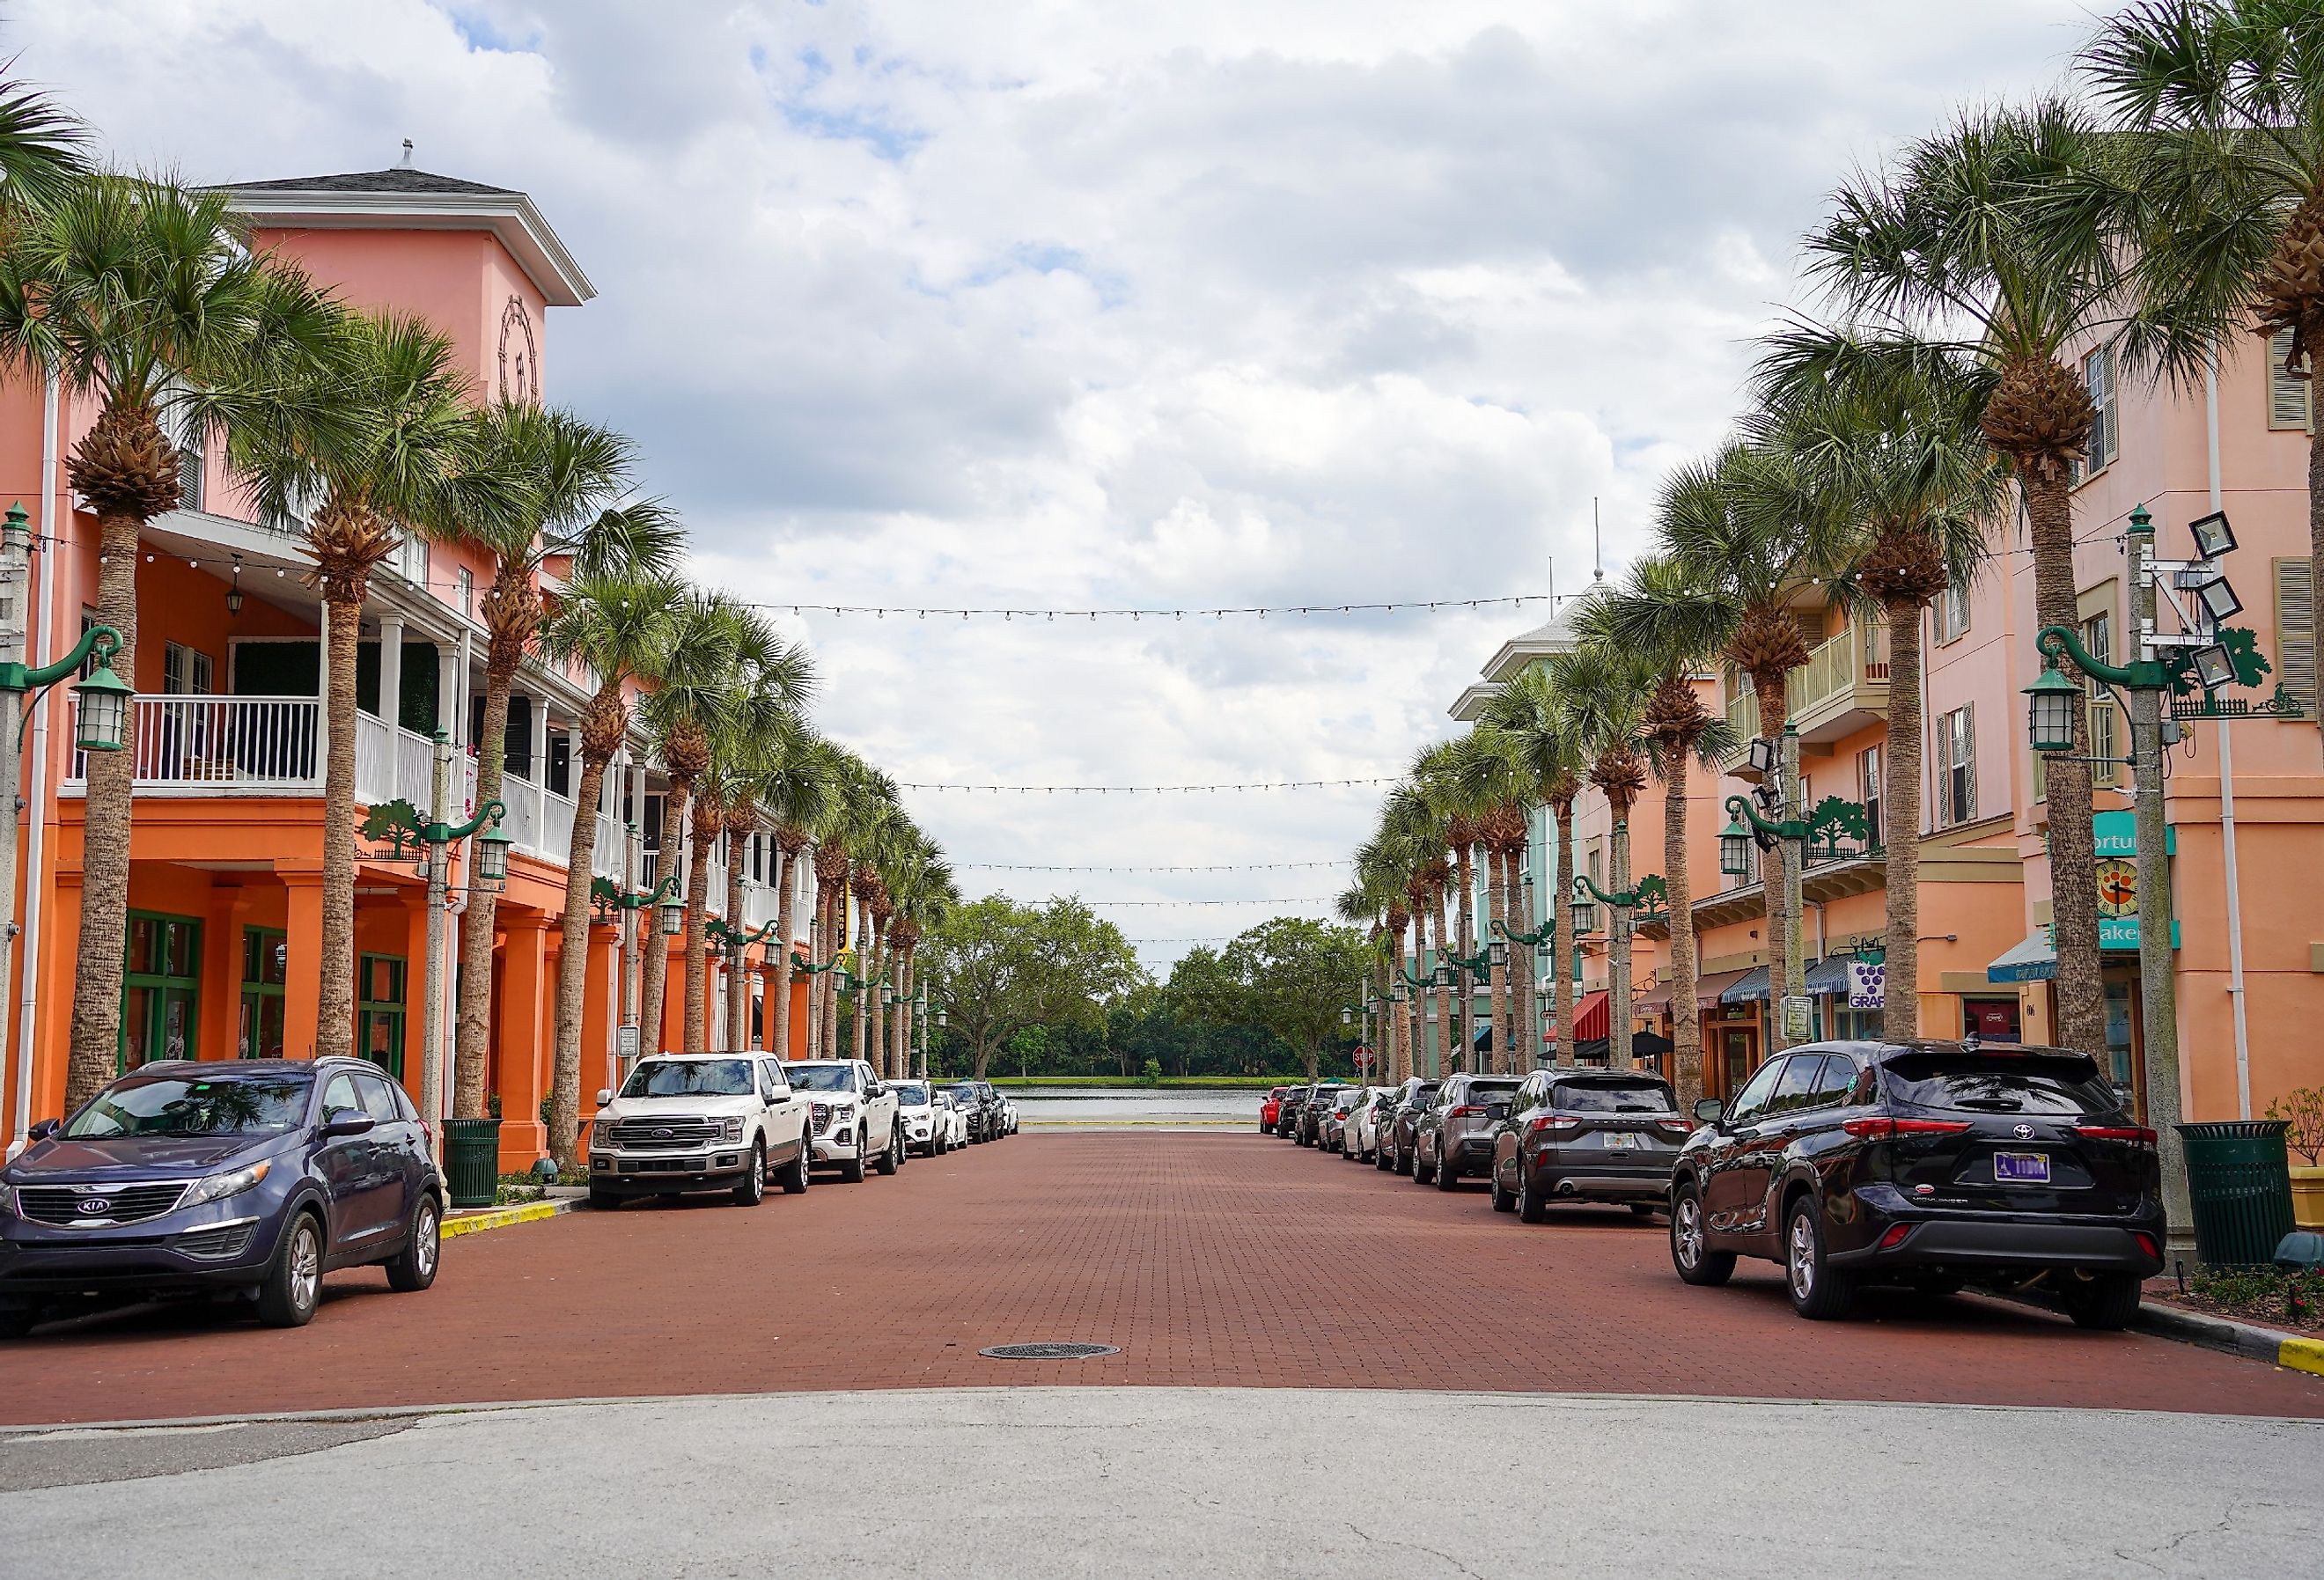 View of Market Street in Celebration, Florida. Image credit JennLShoots via Shutterstock